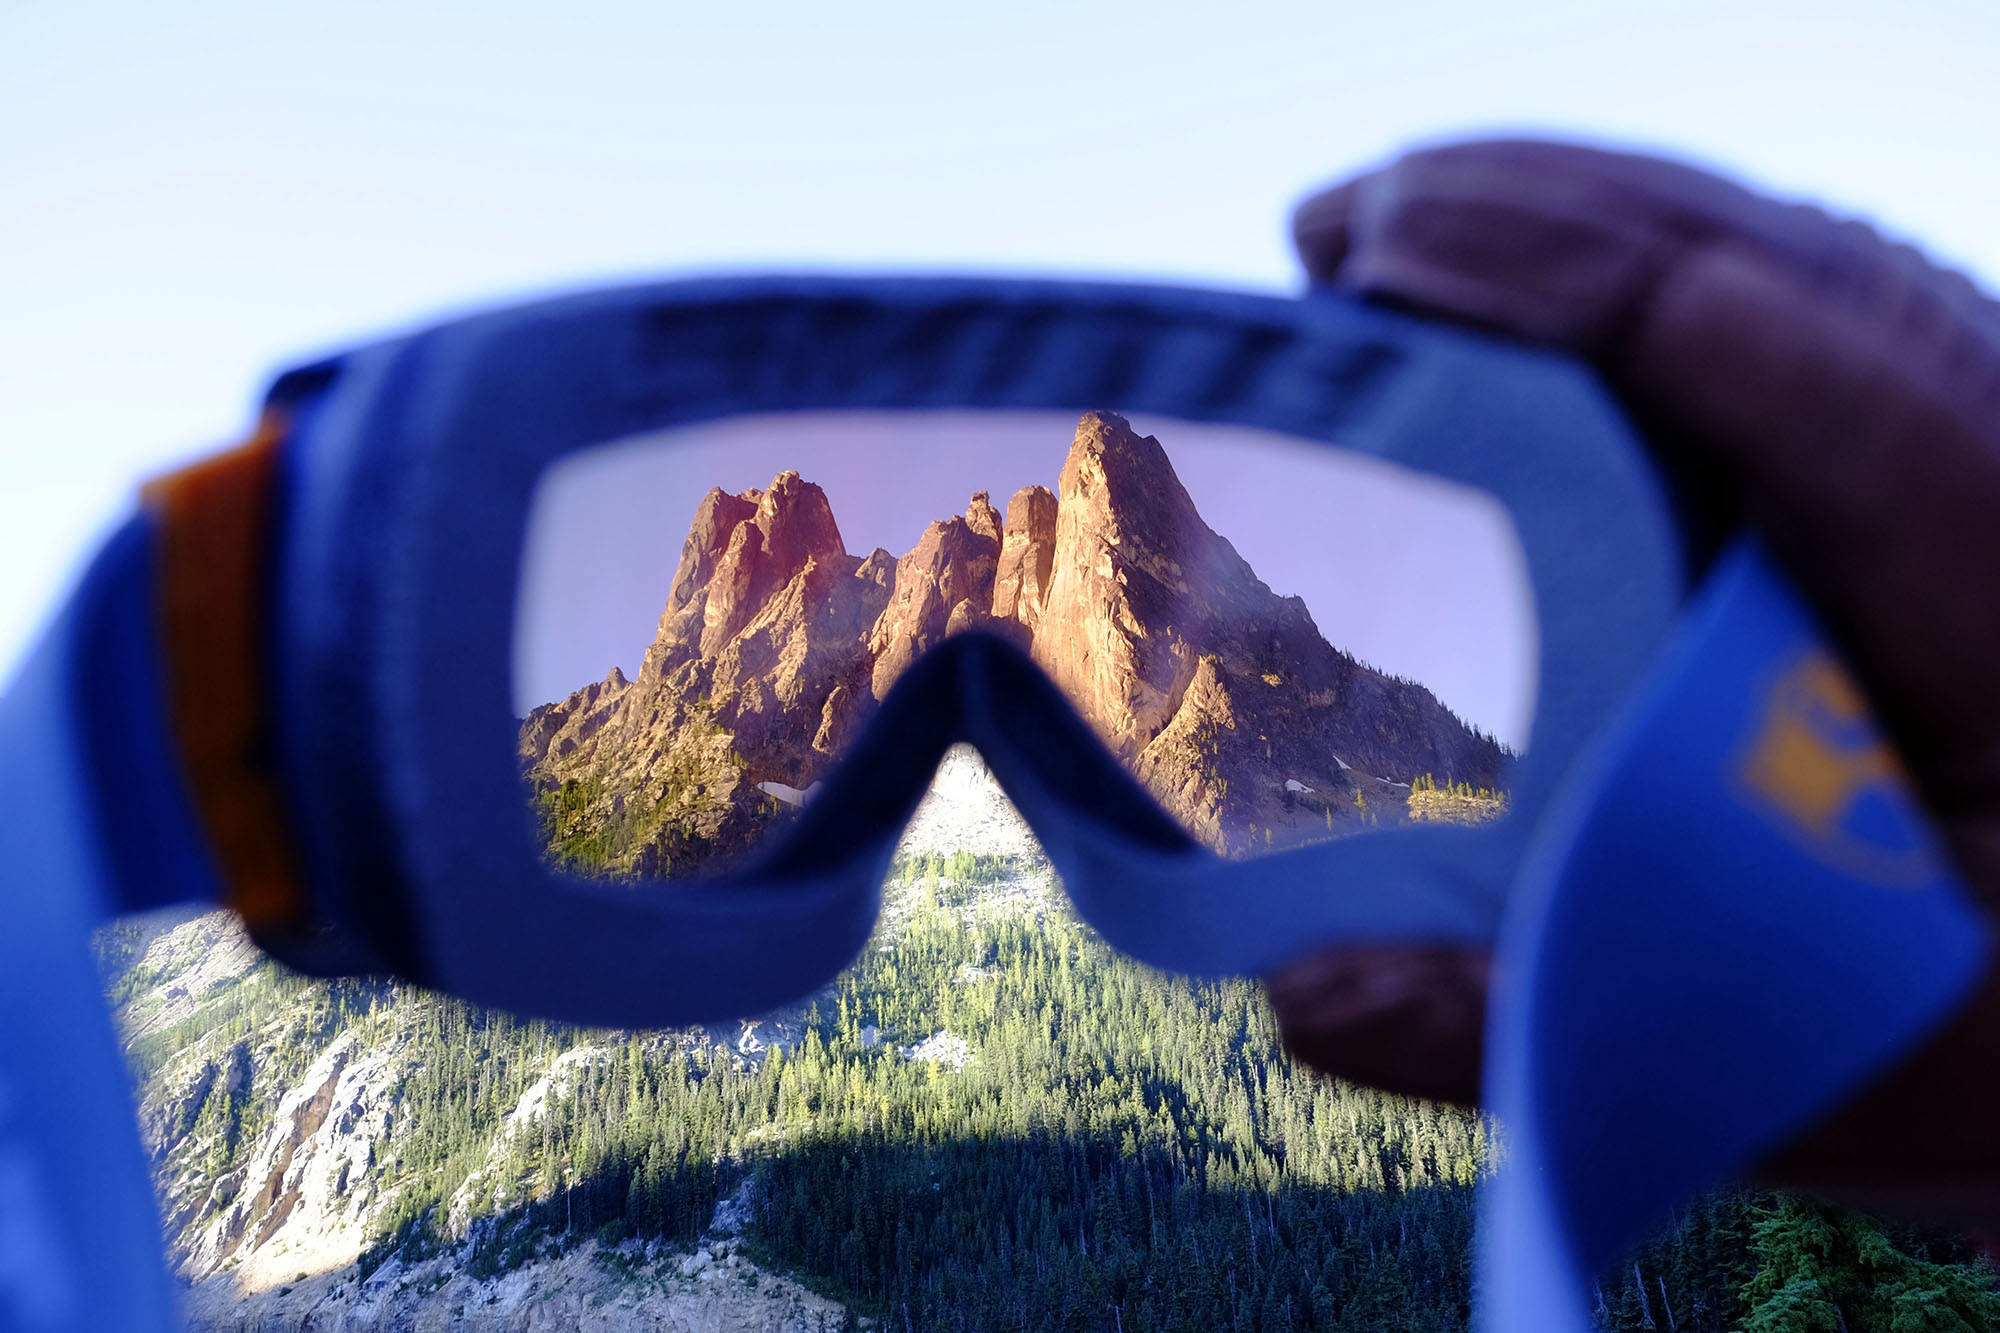 Ski goggle (looking at mountain through lens)